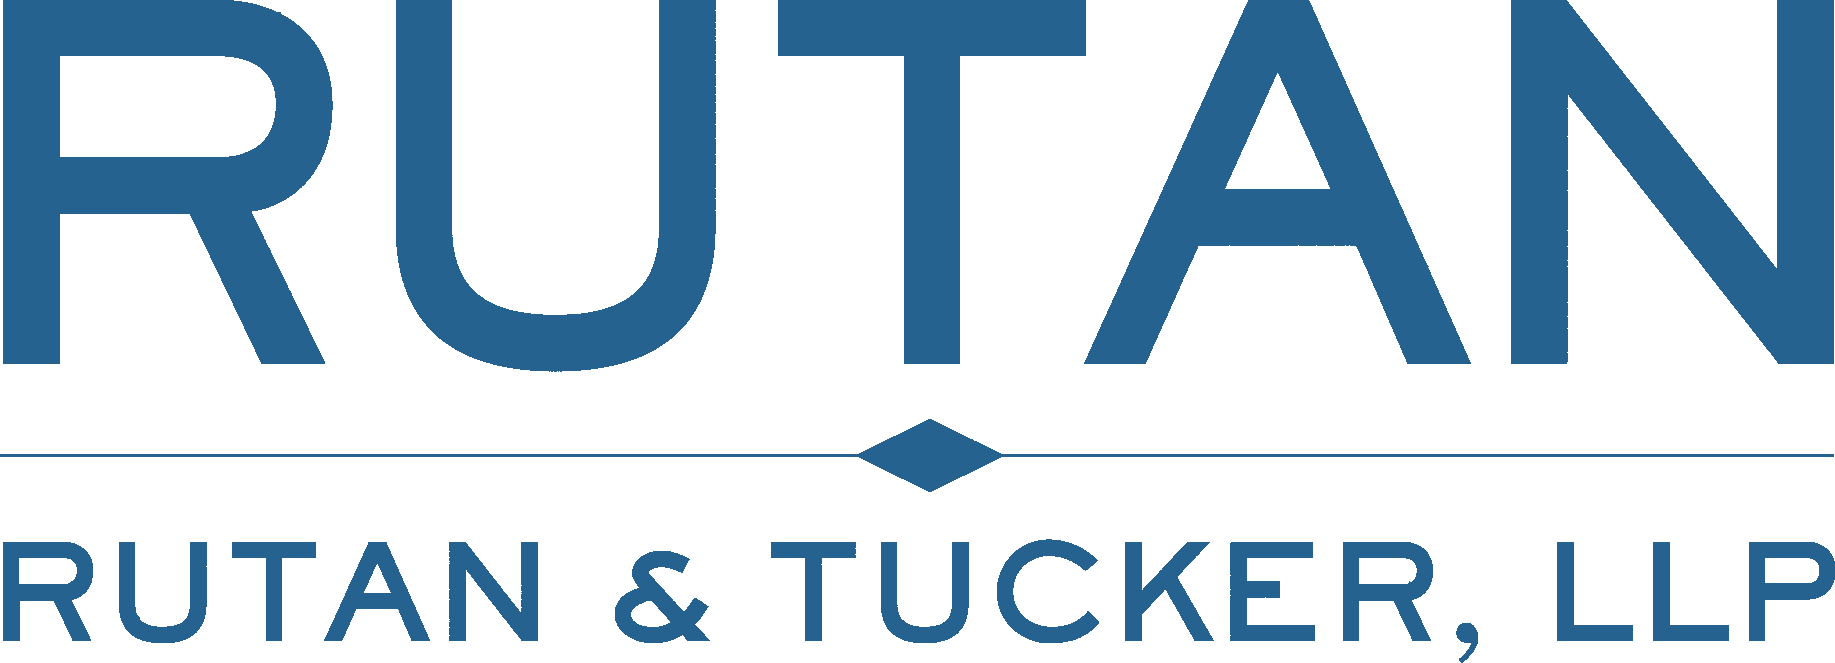 Rutan & Tucker Law